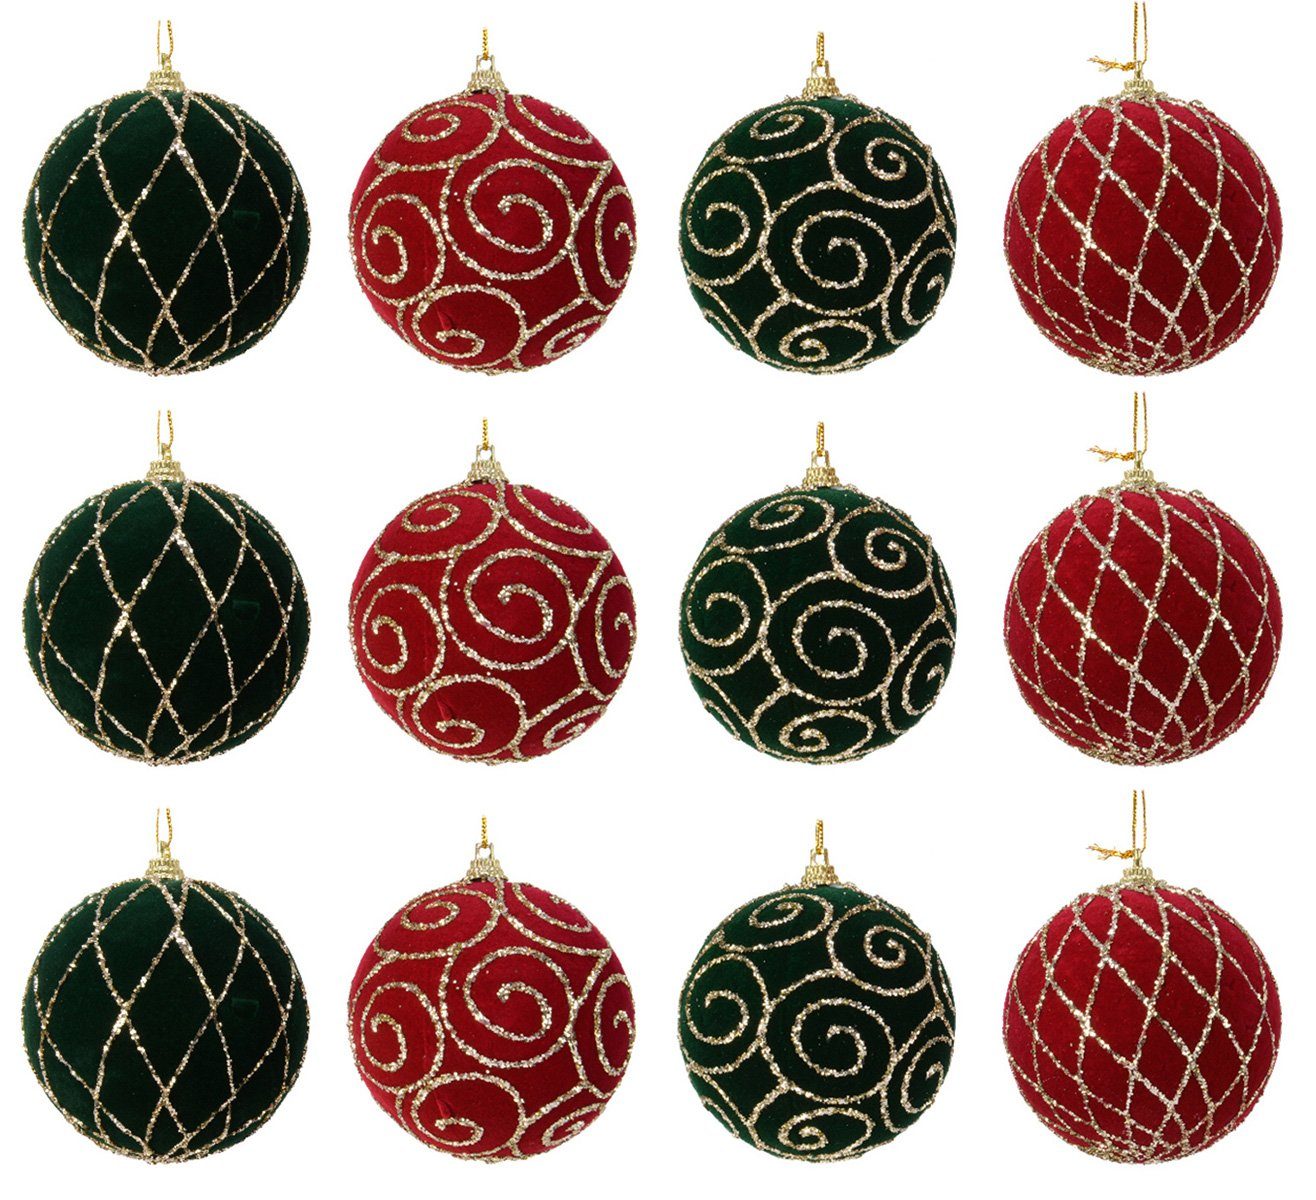 Decoris season decorations Christbaumschmuck, Weihnachtskugeln Kunststoff 8cm Ornamente 12er Set - Dunkelgrün / Rot